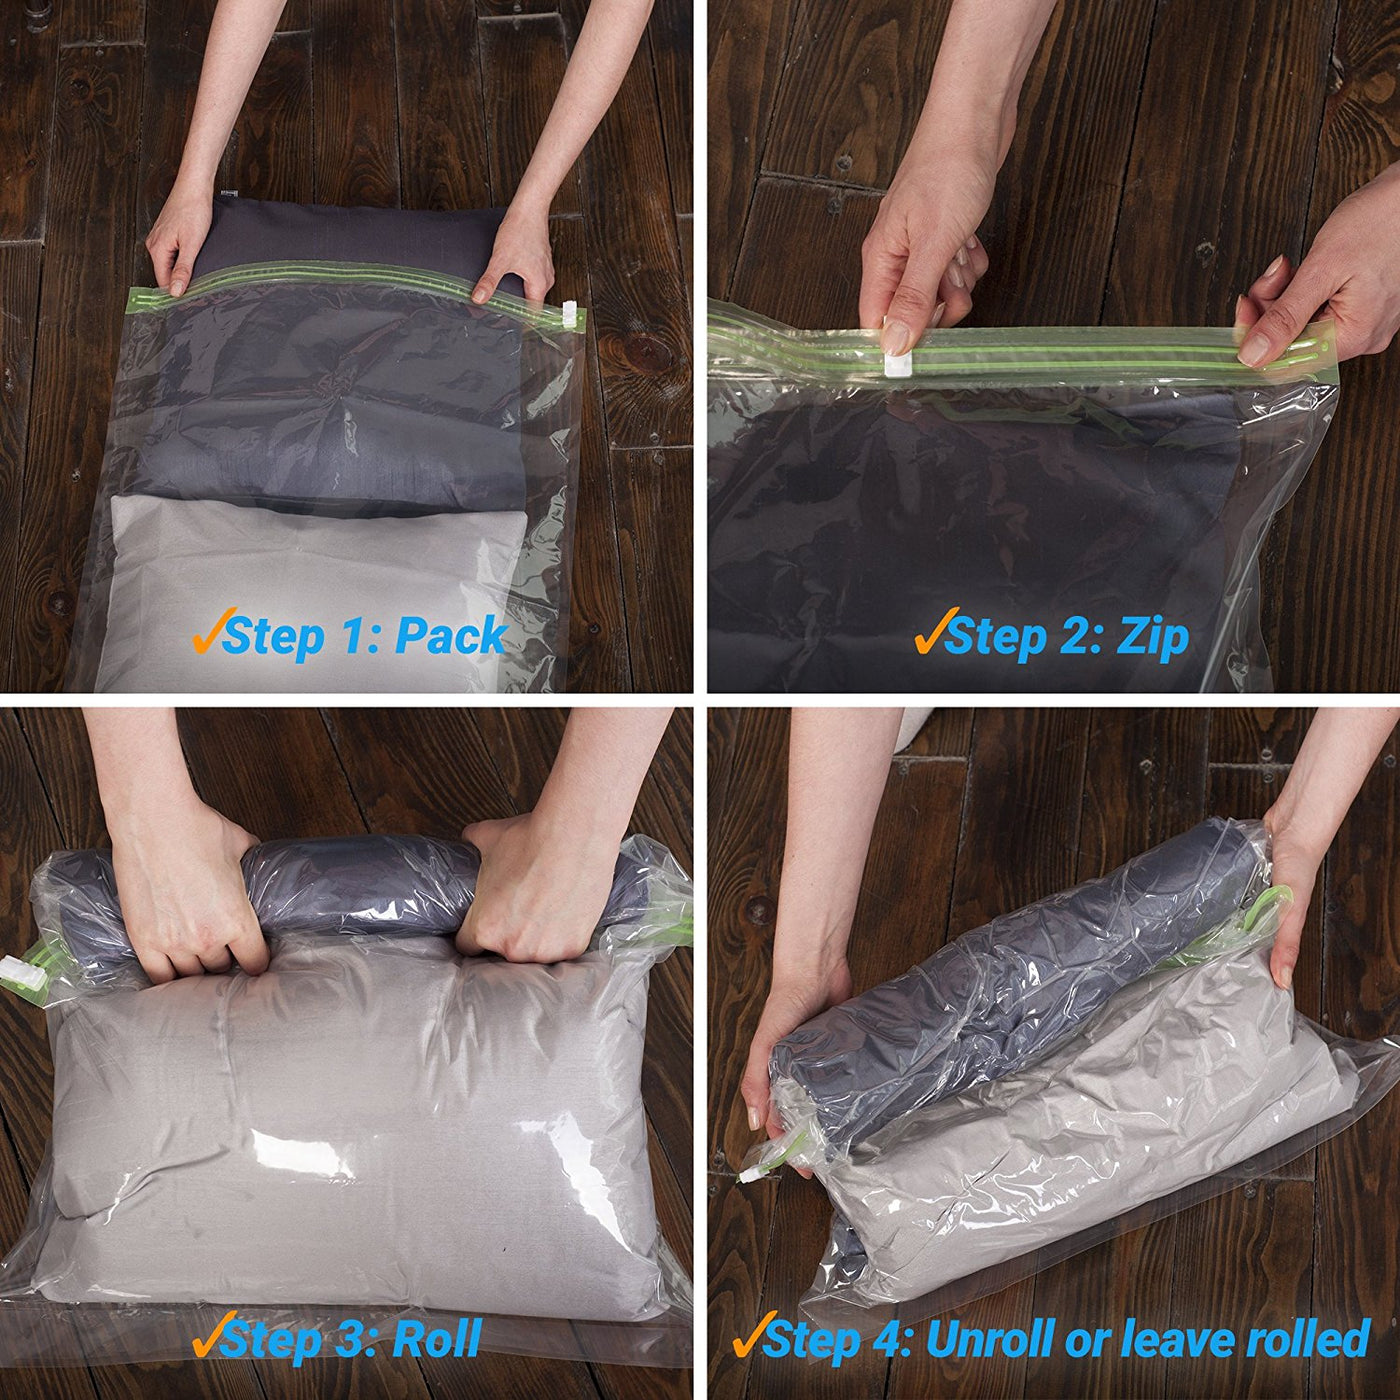 Vacuum Storage Bags With Valve Transparent Folding Compressed